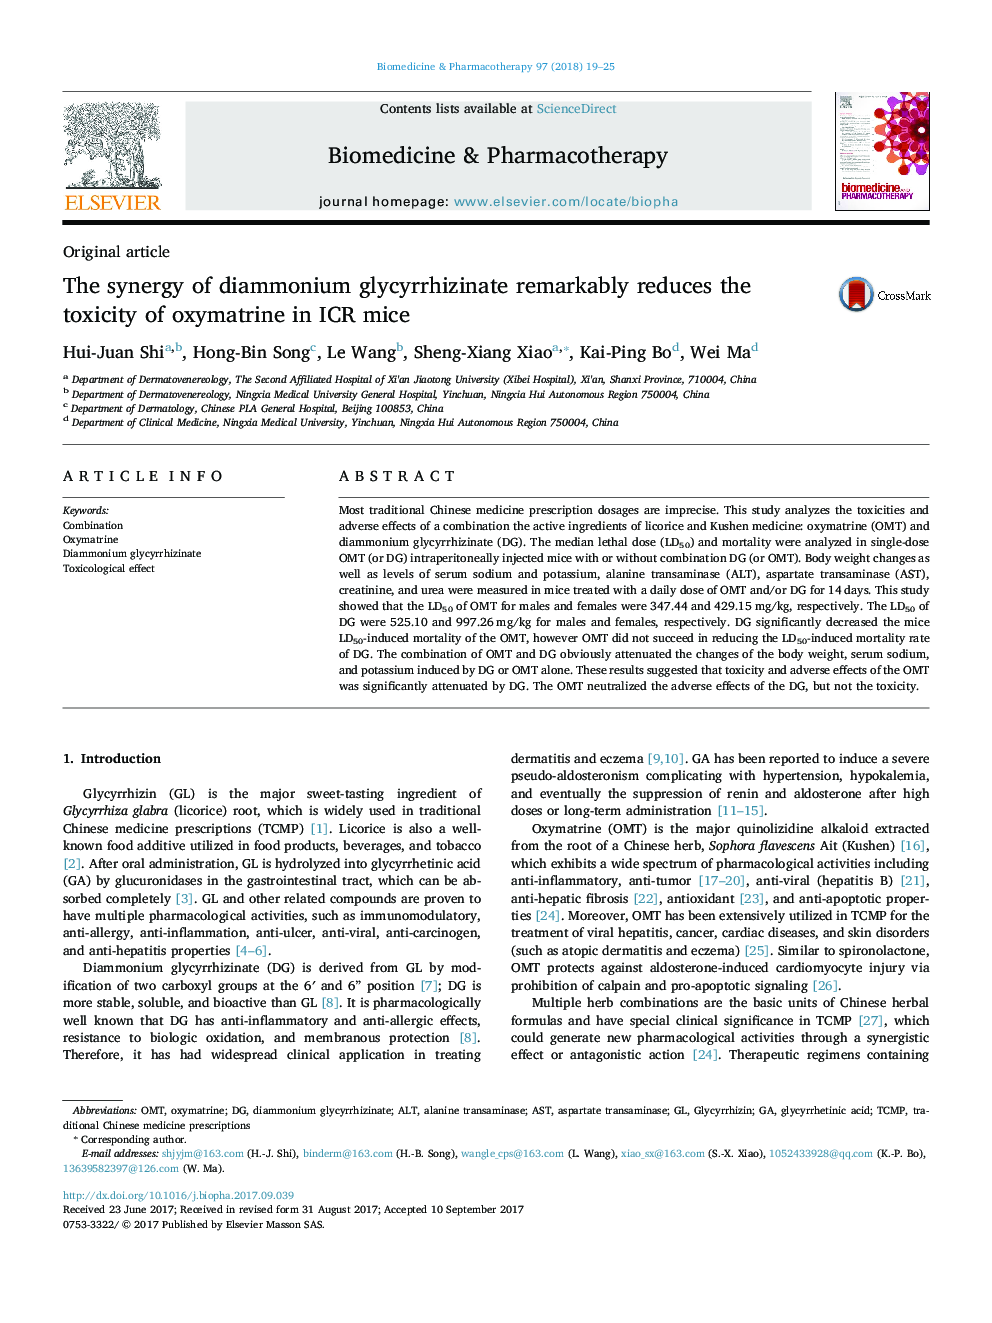 The synergy of diammonium glycyrrhizinate remarkably reduces the toxicity of oxymatrine in ICR mice